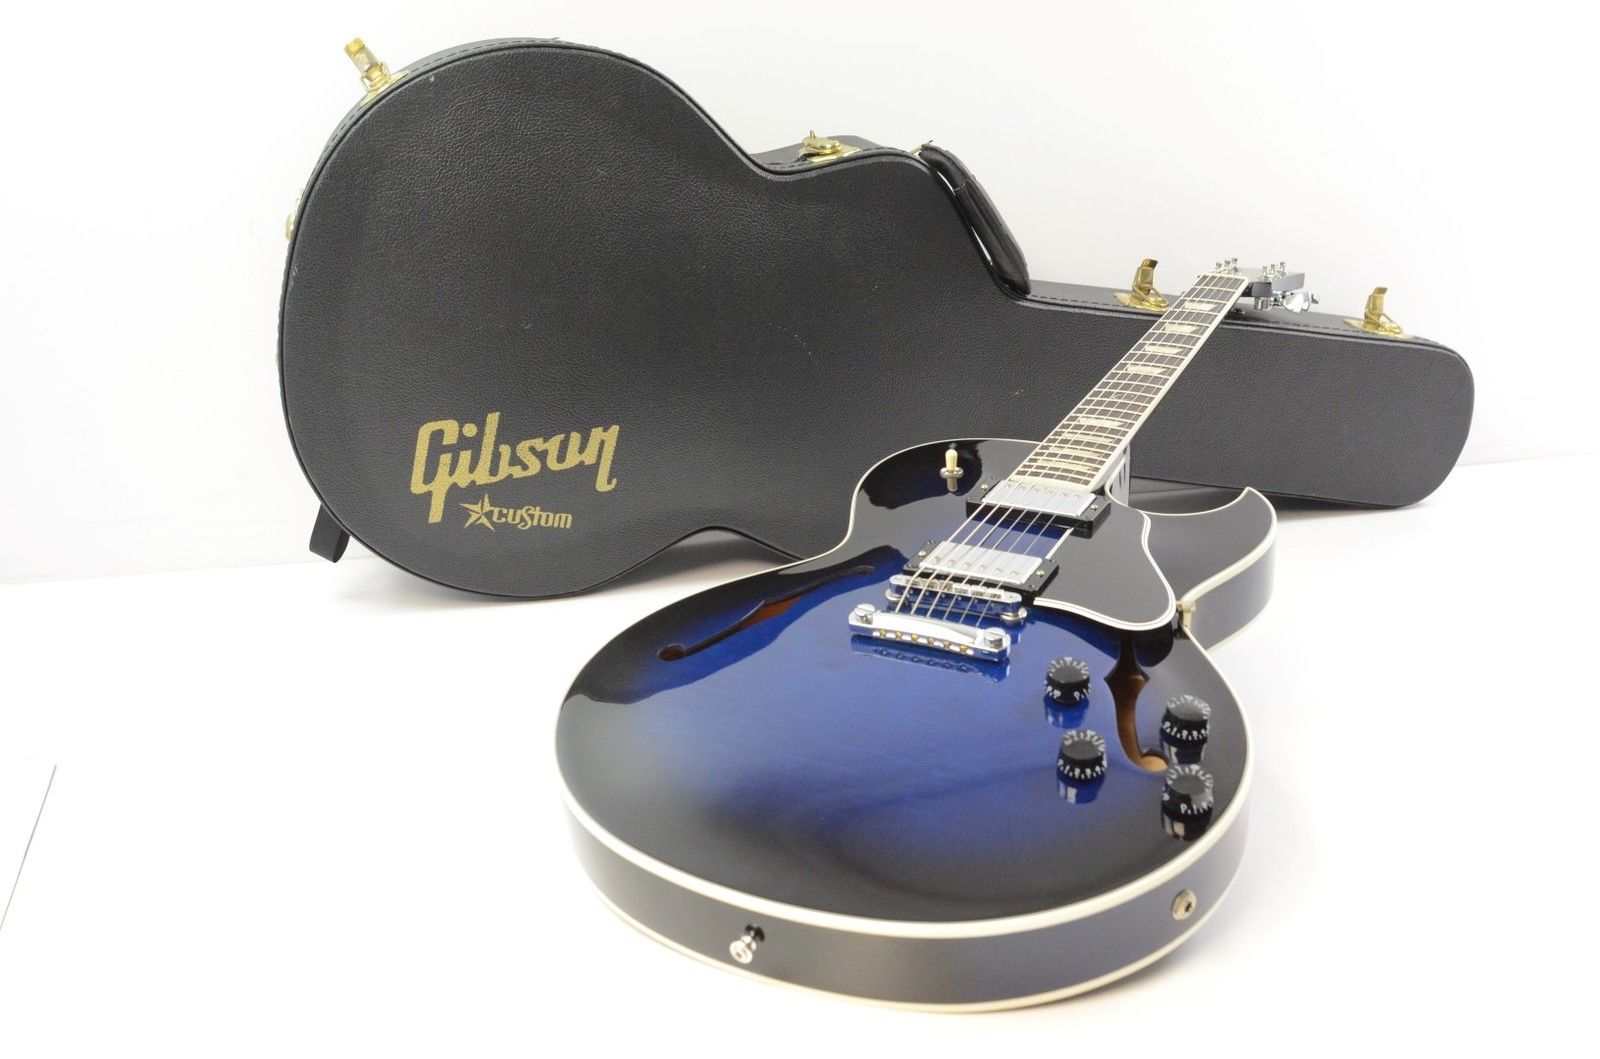   Gibson Memphis ES137 Classic - Blues Burst